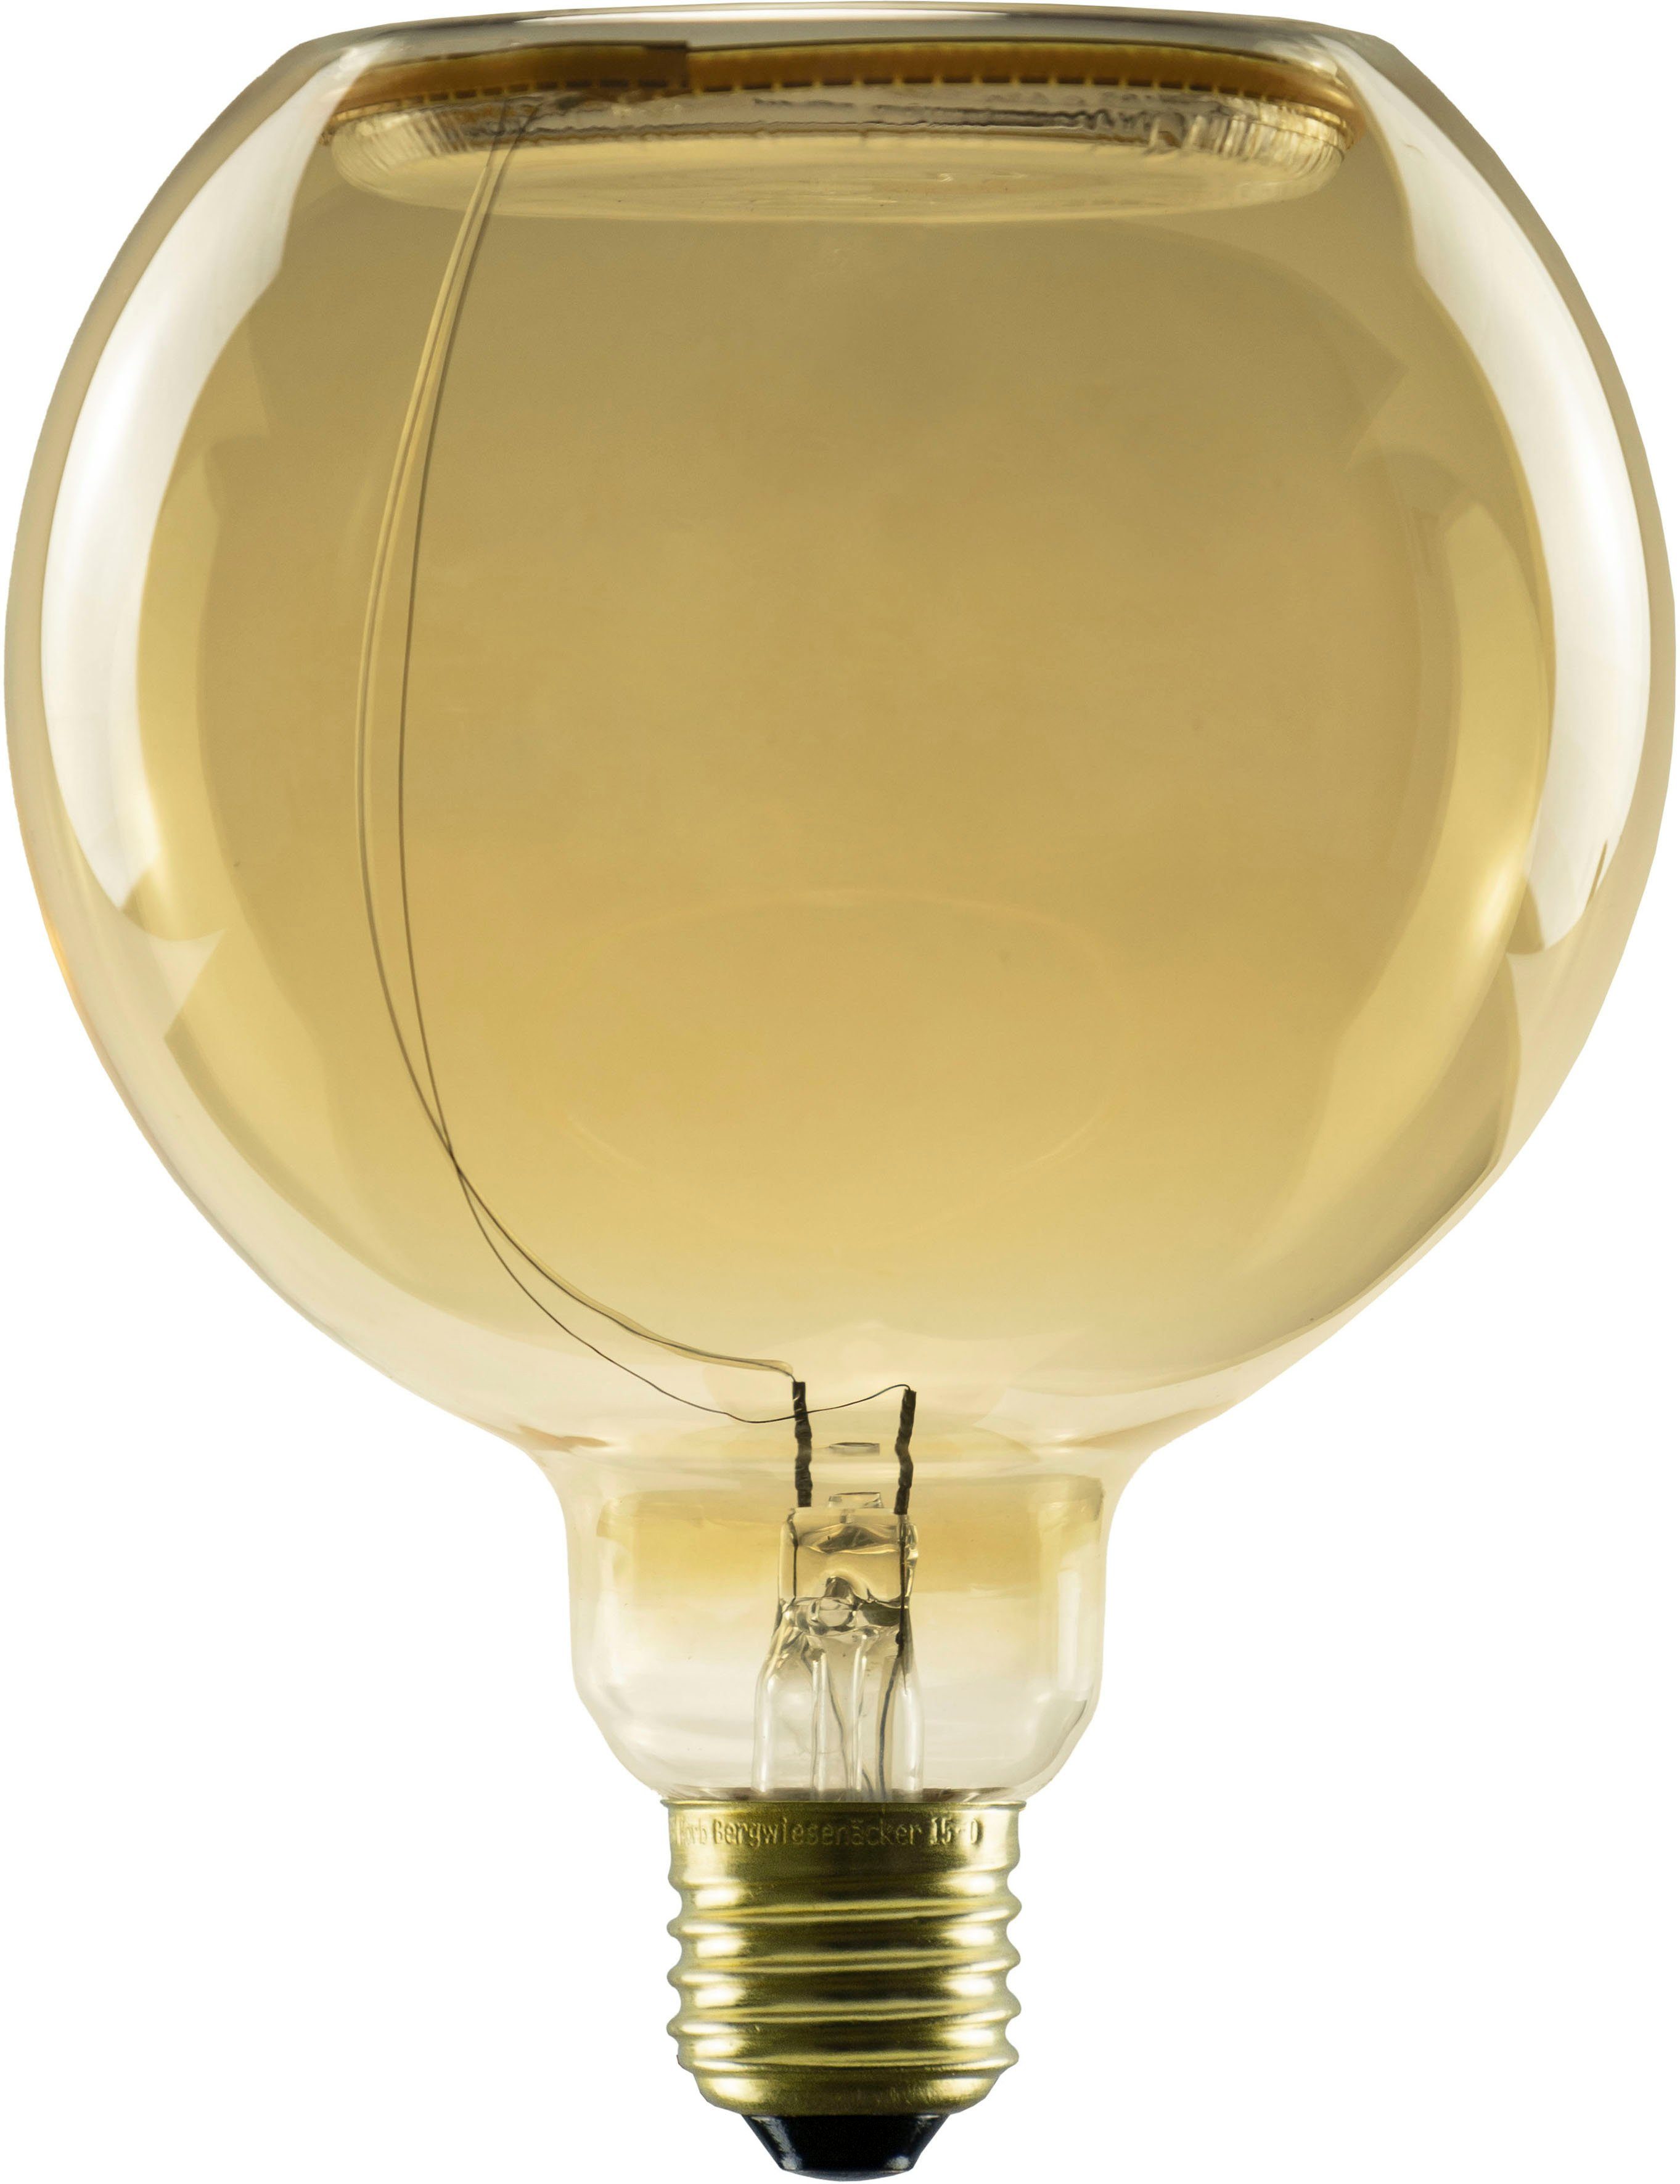 Extra-Warmweiß, gold, Aussenbereich St., E27, gold, SEGULA 1 Floating 125 Globe LED CRI Globe LED-Leuchtmittel 4W, LED dimmbar, 125 90, E27, Floating